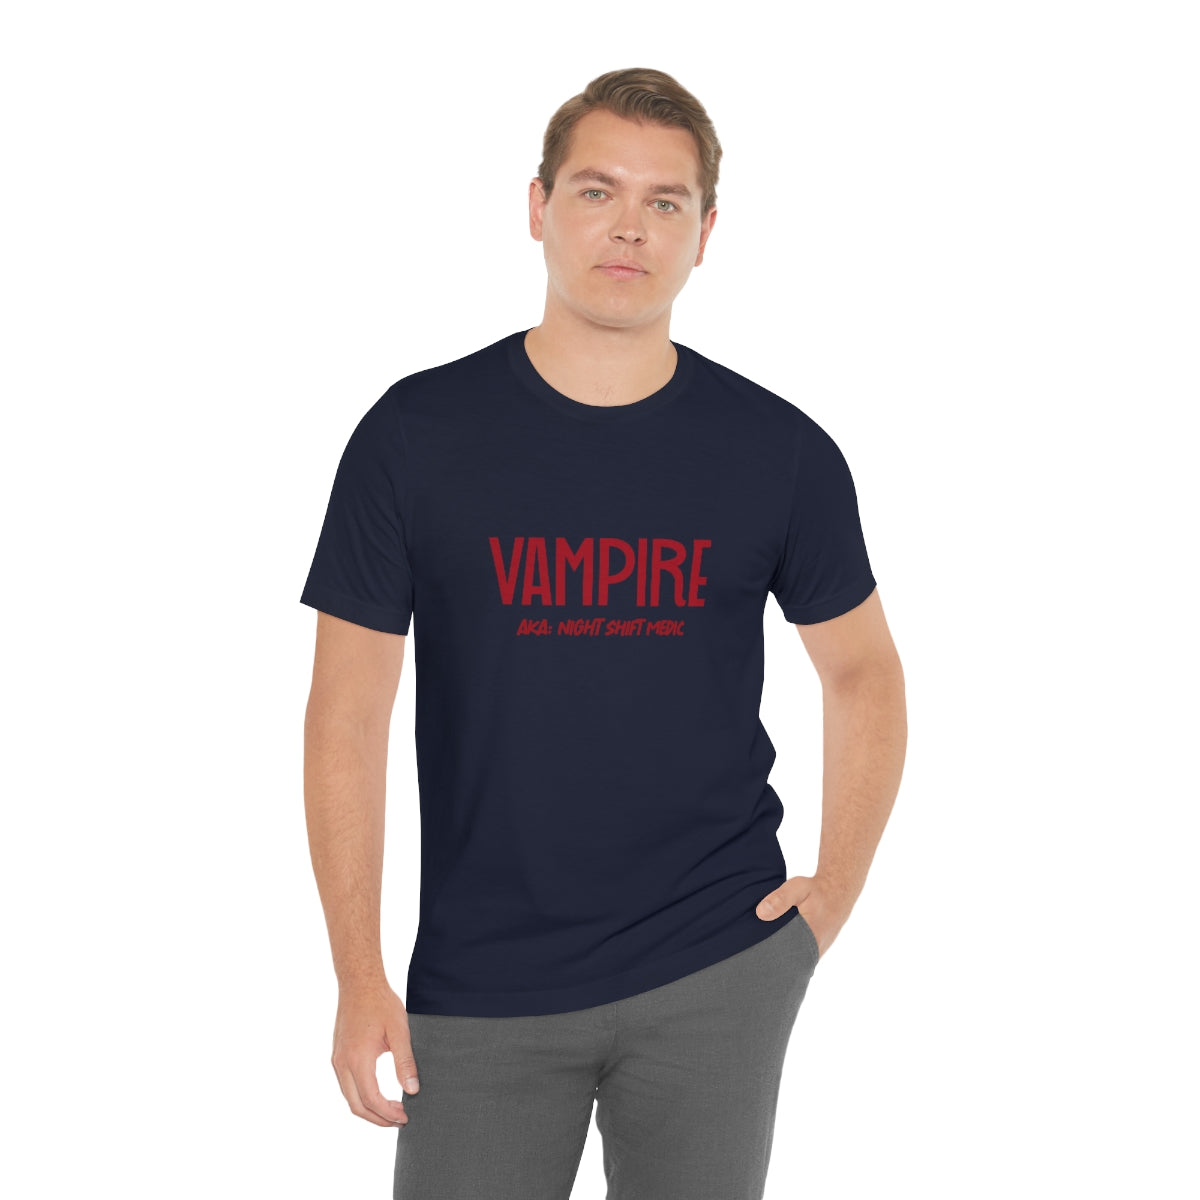 Vampire: AKA Night Shift Medic Unisex Jersey Short Sleeve Tee